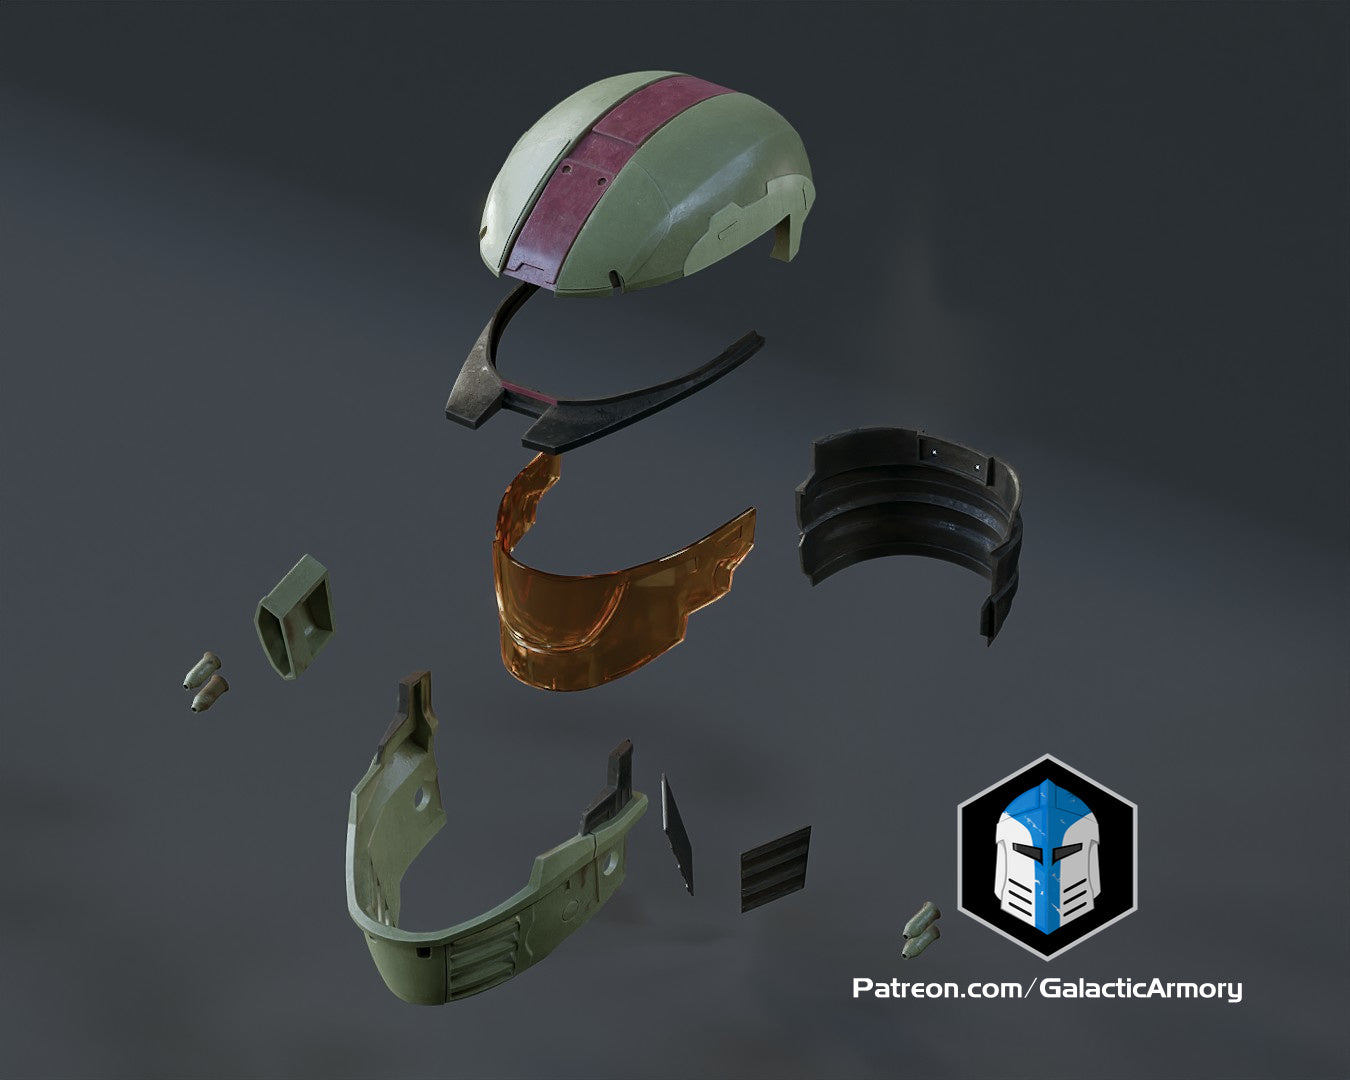 Halo Mark 4 Spartan Helmet - 3D Print Files